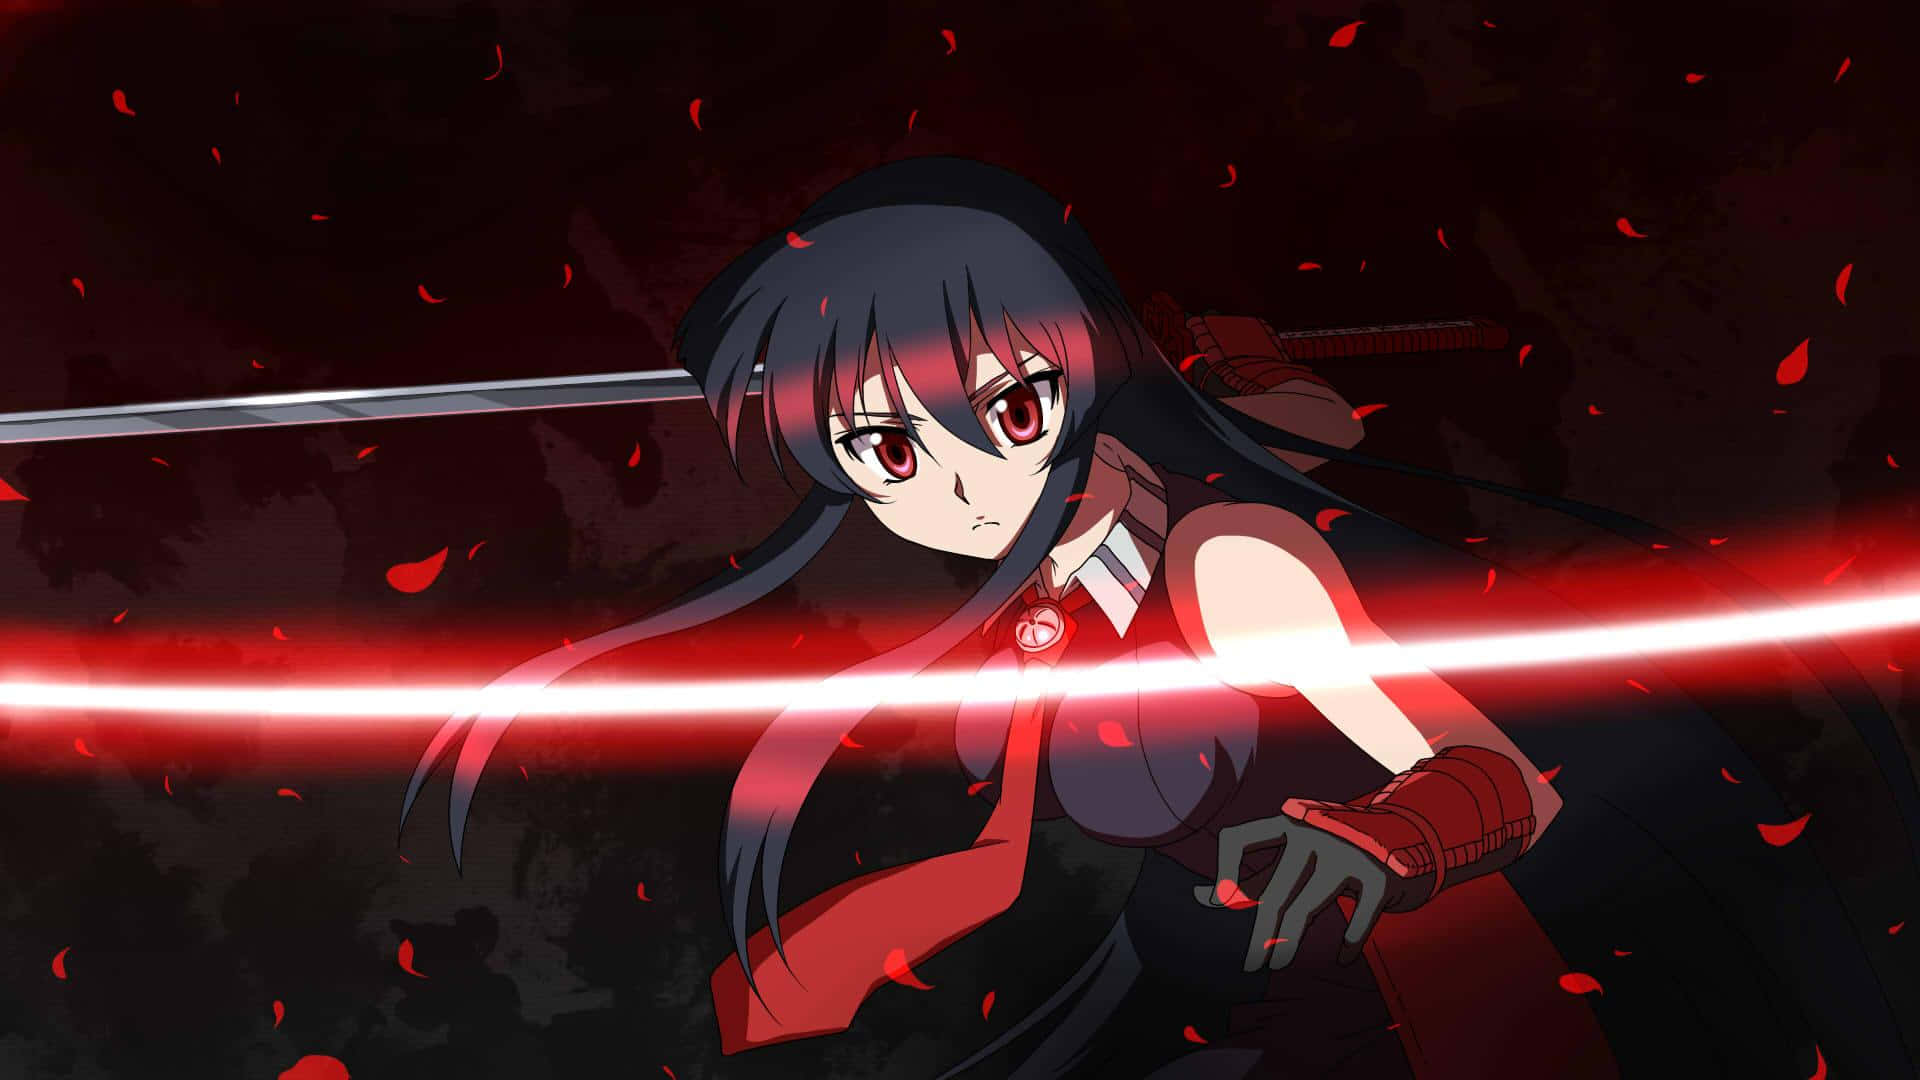 Akame Ga Kill - A world of danger and individual strength